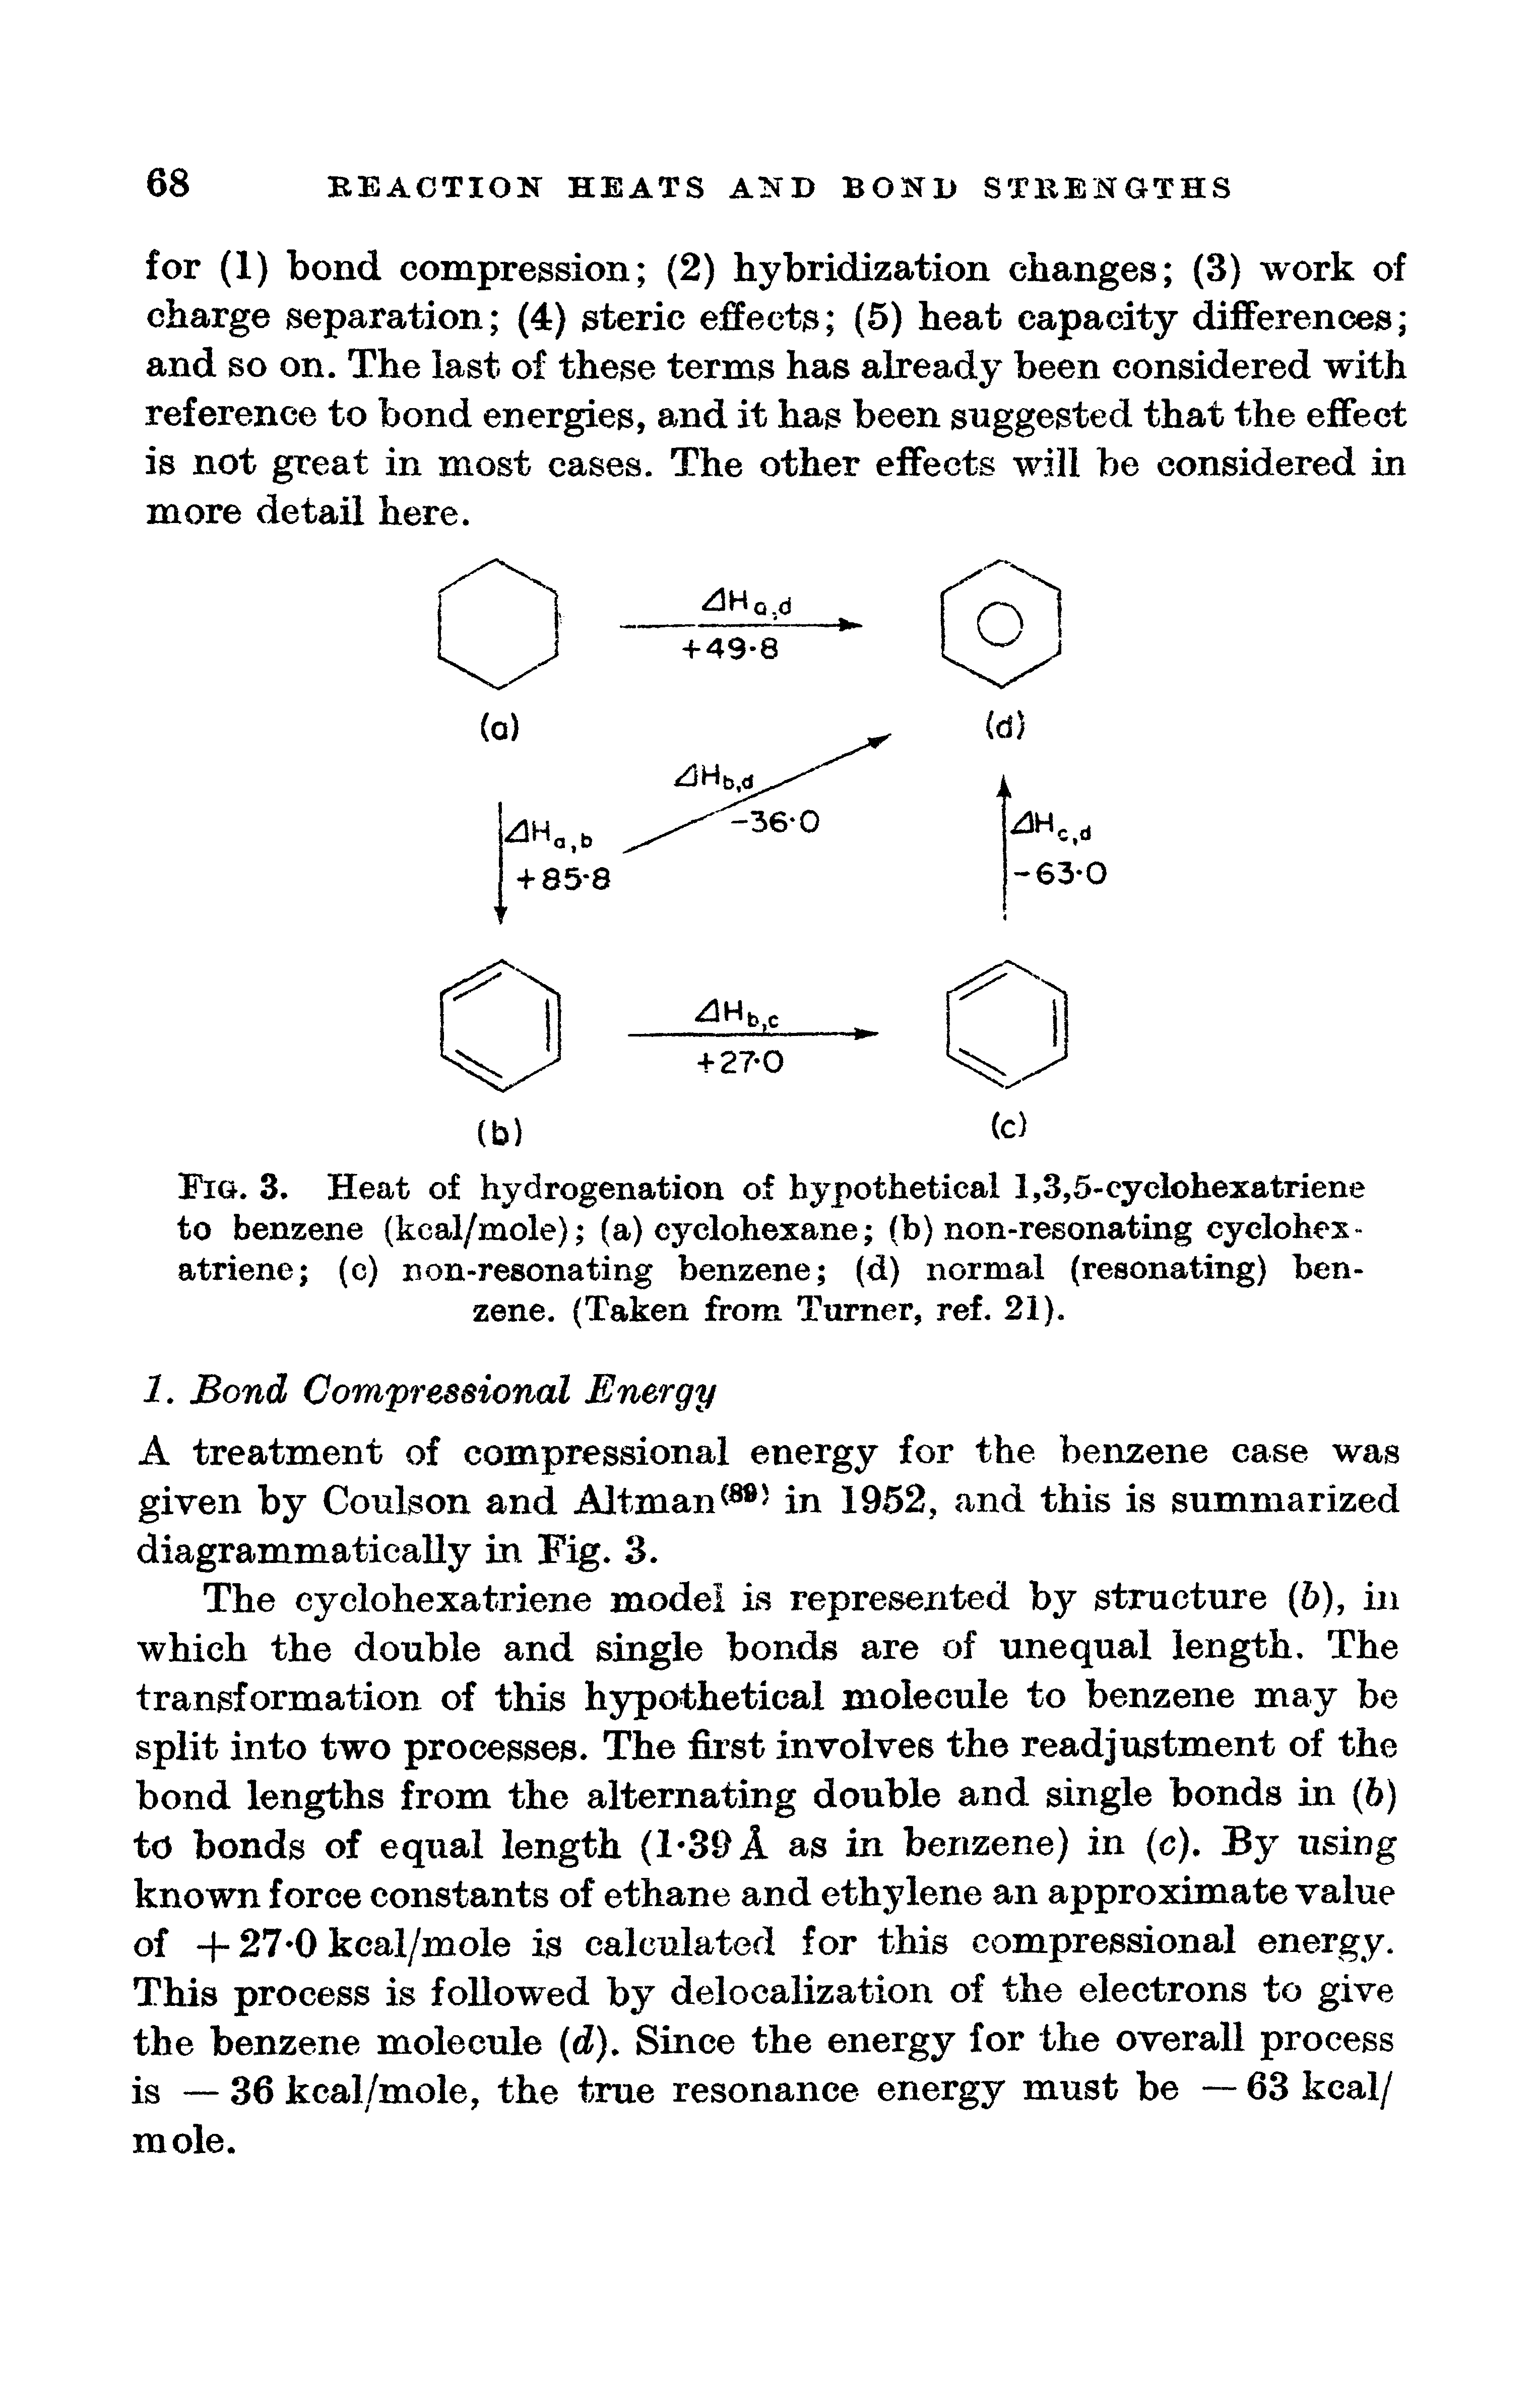 Fig. 3. Heat of hydrogenation of hypothetical 1,3,5-cyclohexatriene to benzene (kcal/mole) (a) cyclohexane (b) non-resonating cyclohex-atriene (c) non-resonating benzene (d) normal (resonating) benzene. (Taken from Turner, ref. 21).